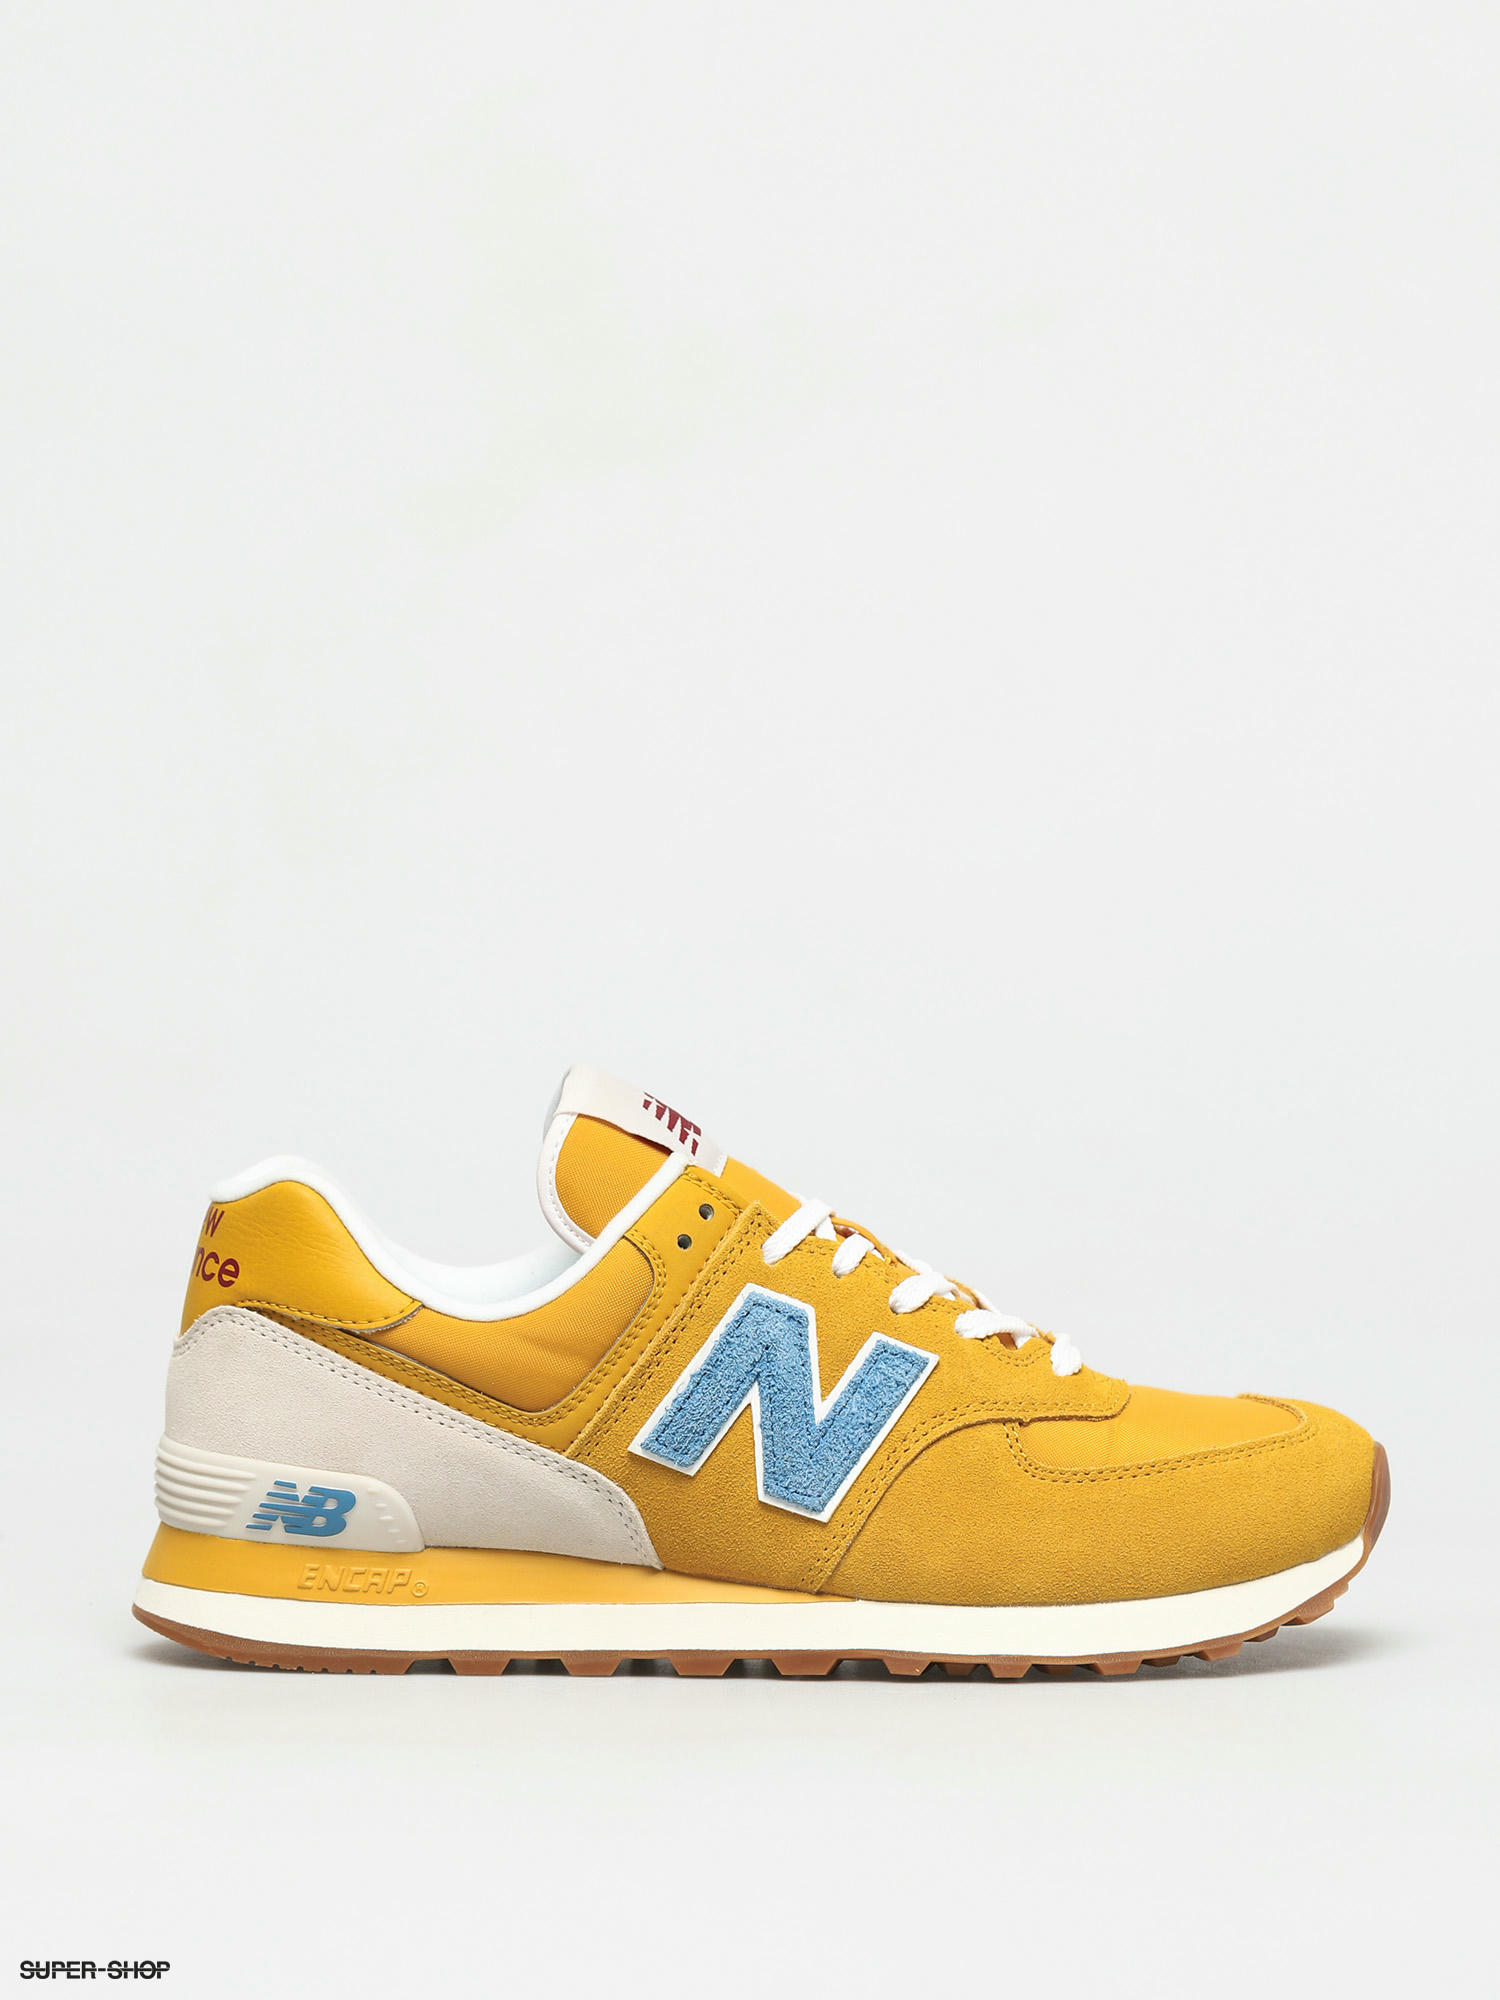 New Balance 574 Shoes (yellow/blue)